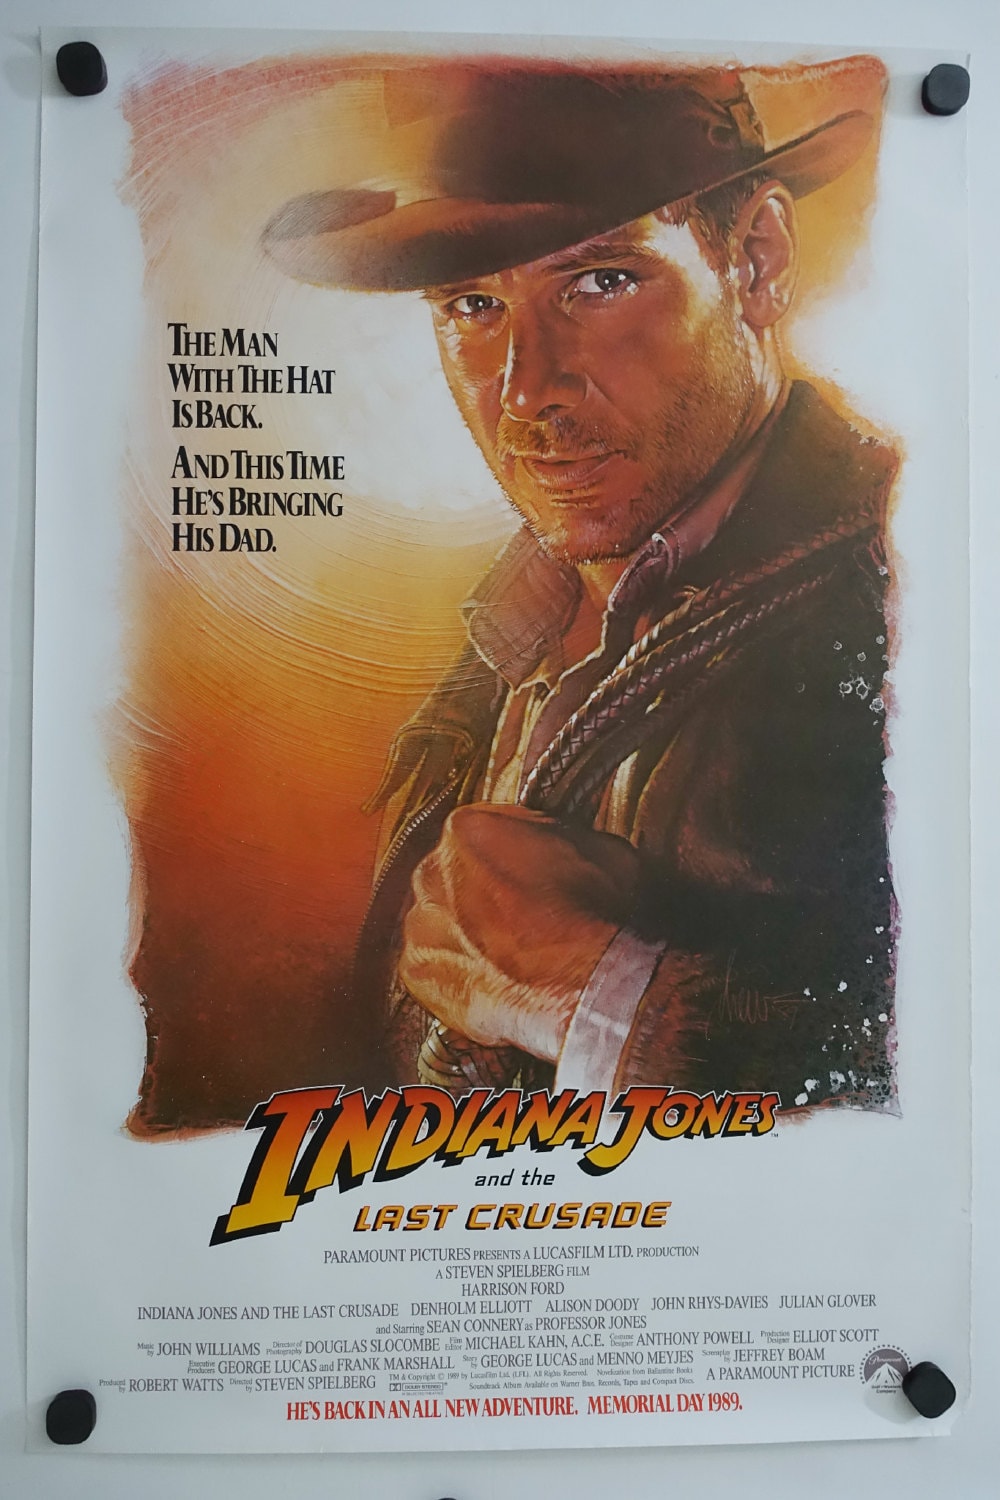 1989 "Indiana Jones and the Last Crusade" Movie Poster - Original Vintage Poster